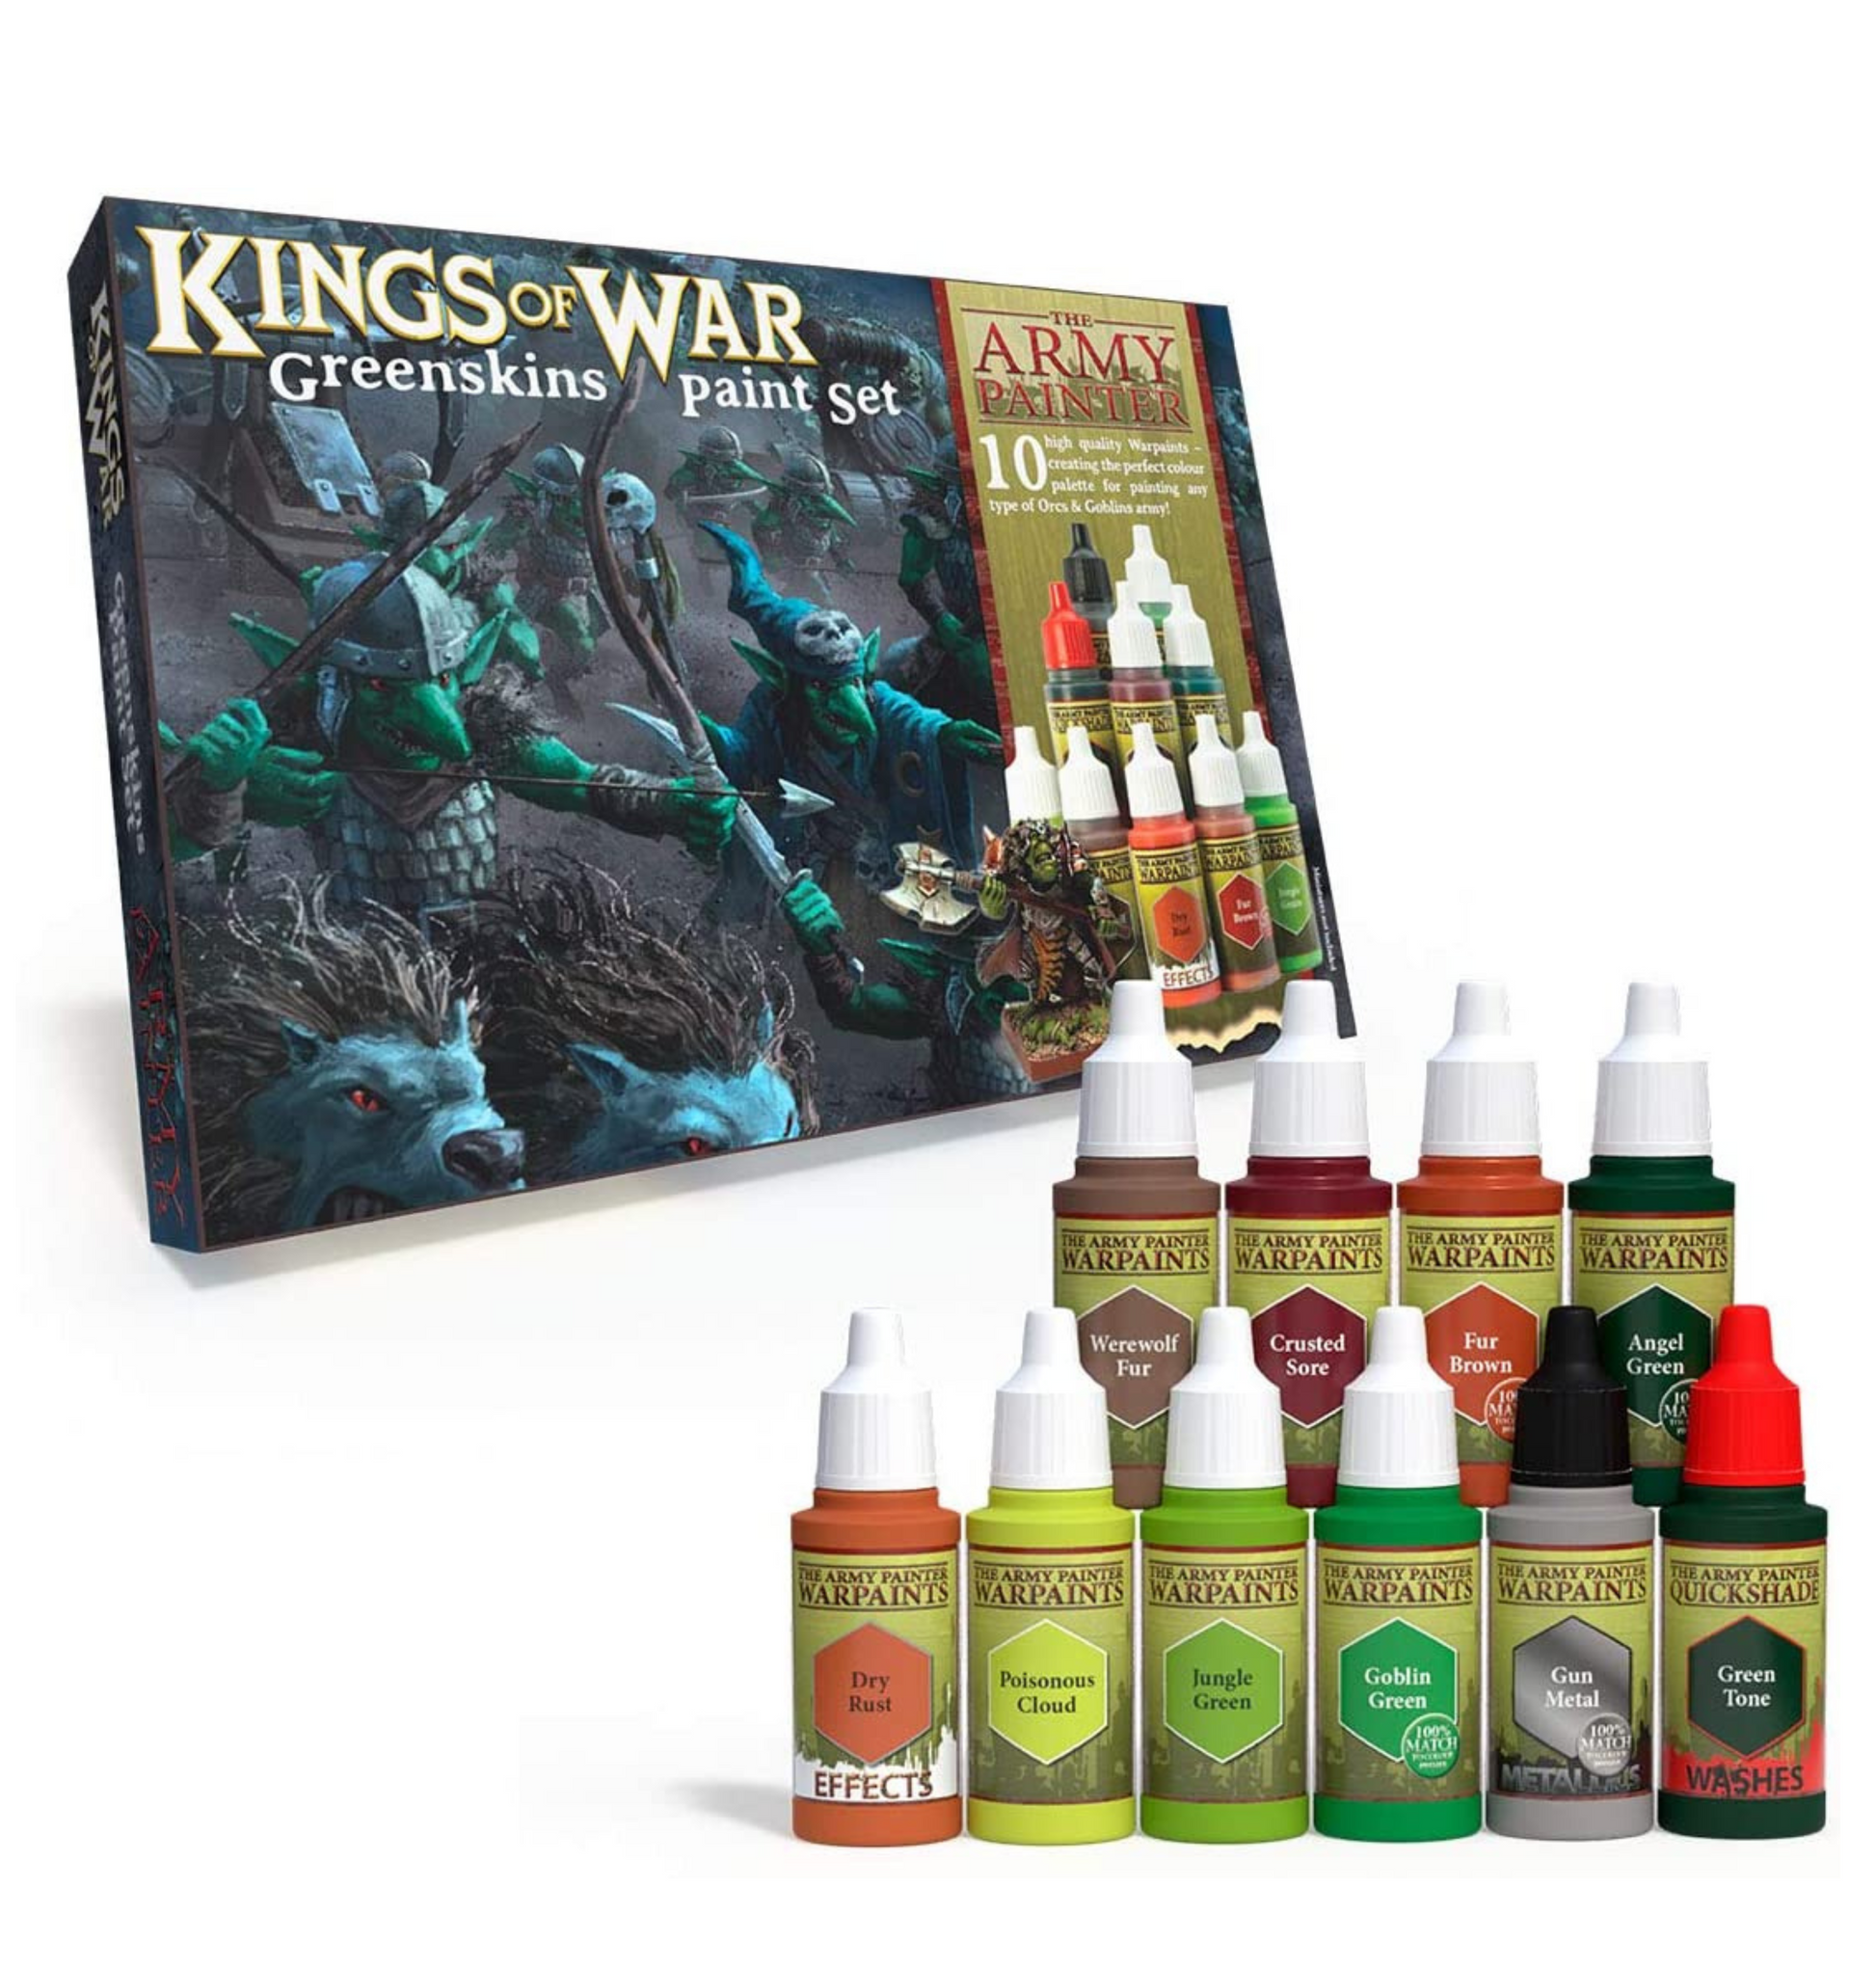 Army Painter Warpaints: Kings of War Greenskins Paint Set (10)